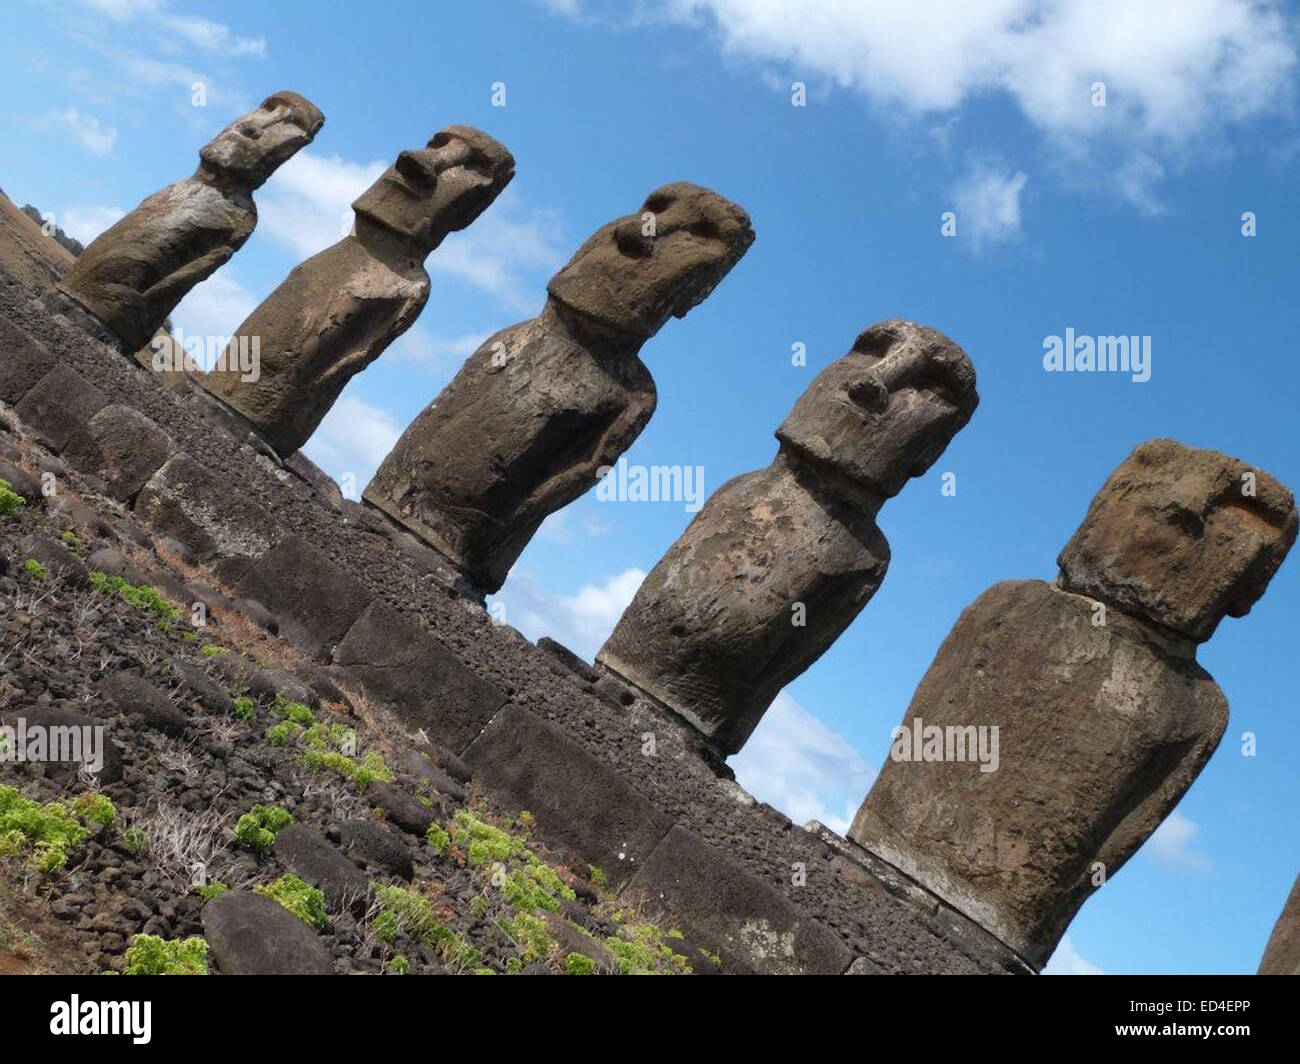 The giant, stone Moai statues at Ahu Tongariki, Rapa Nui (Easter Island), Chile Stock Photo